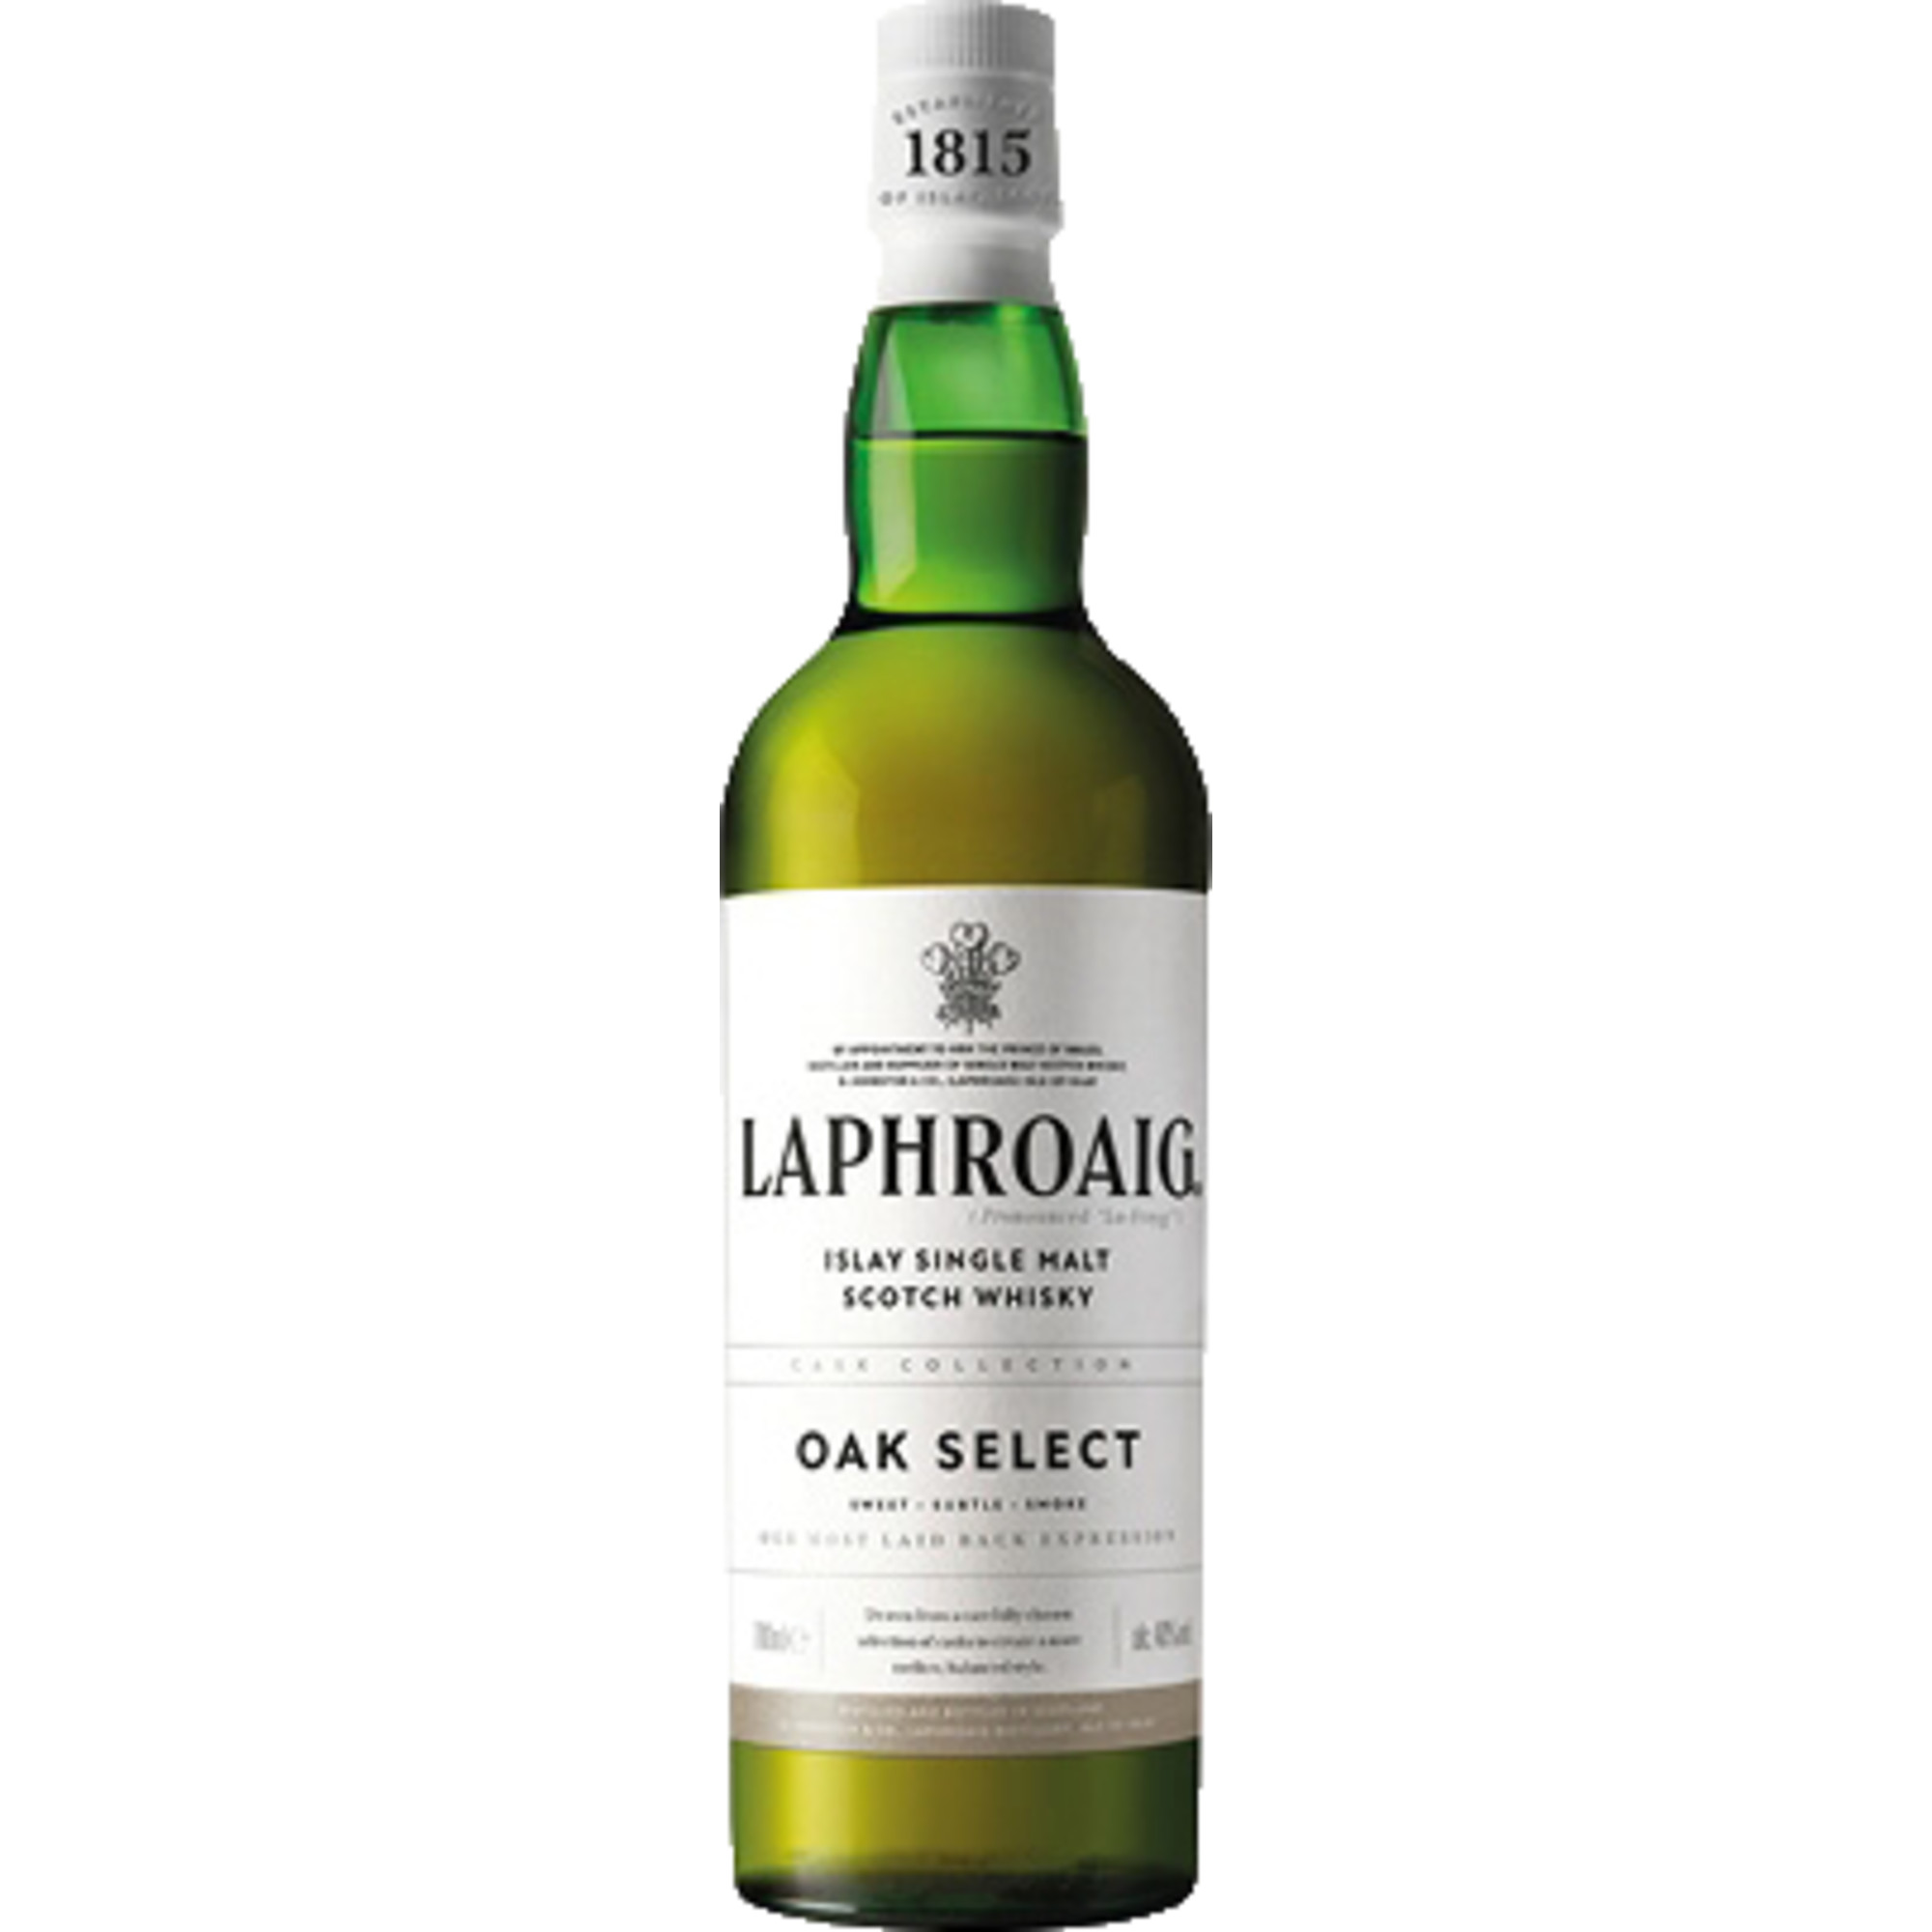 Laphroaig Select Islay Single Malt, Scotch Whisky, 0,7 L, 40% Vol., Schottland, Spirituosen D. Johnston & Company (Laphroaig) Ltd, Springburn Bond, Carlisle St, Glasgow G21 1EQ, Scotland Hawesko DE